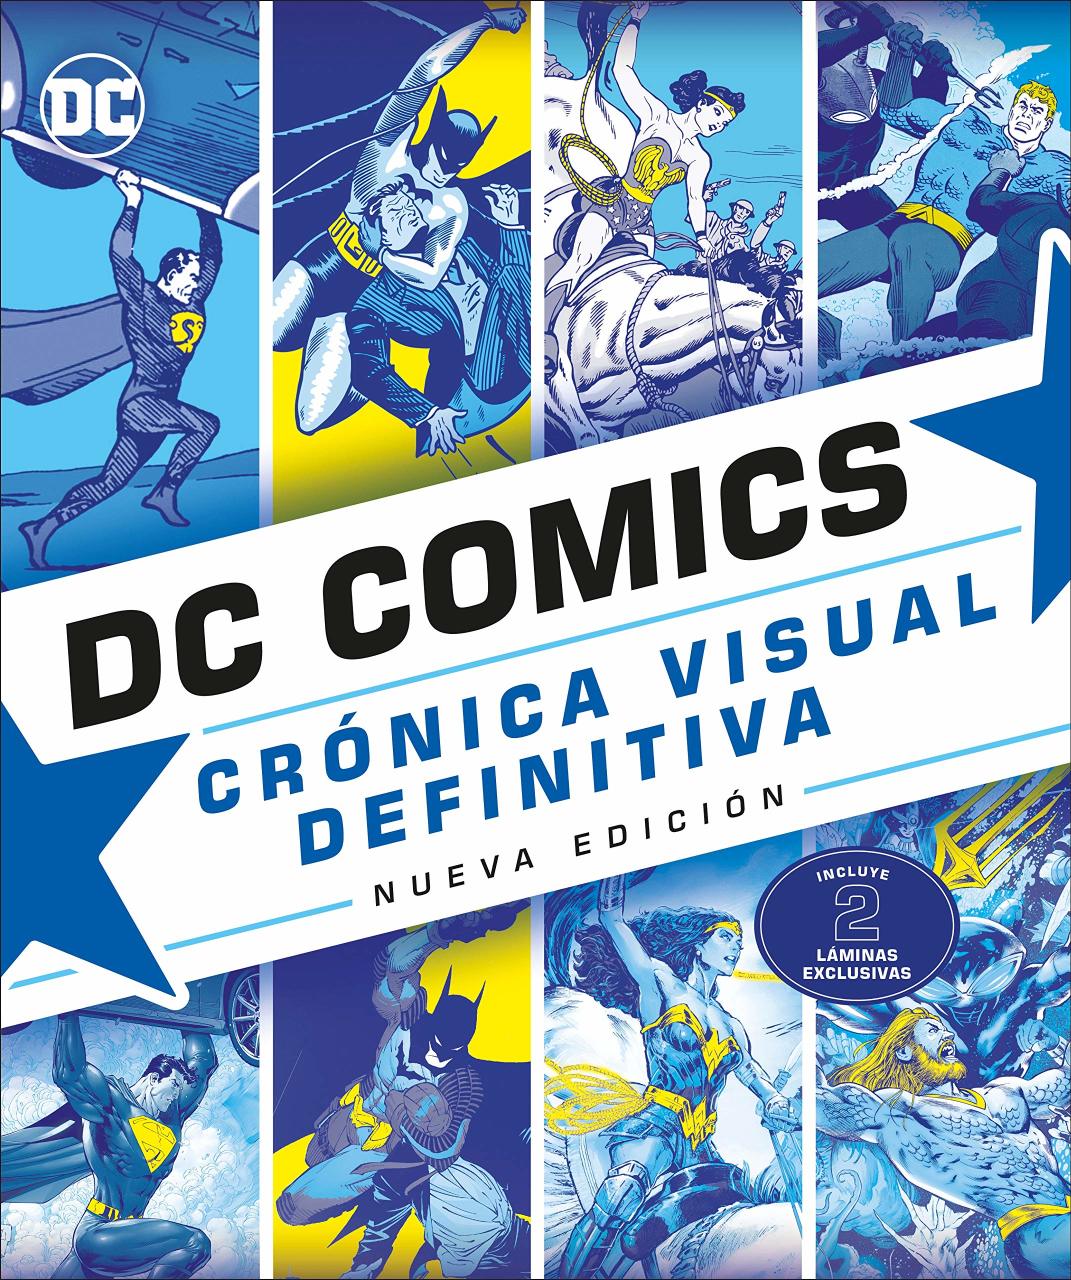 DC Comics Cronica Visual [Spanish Edition]